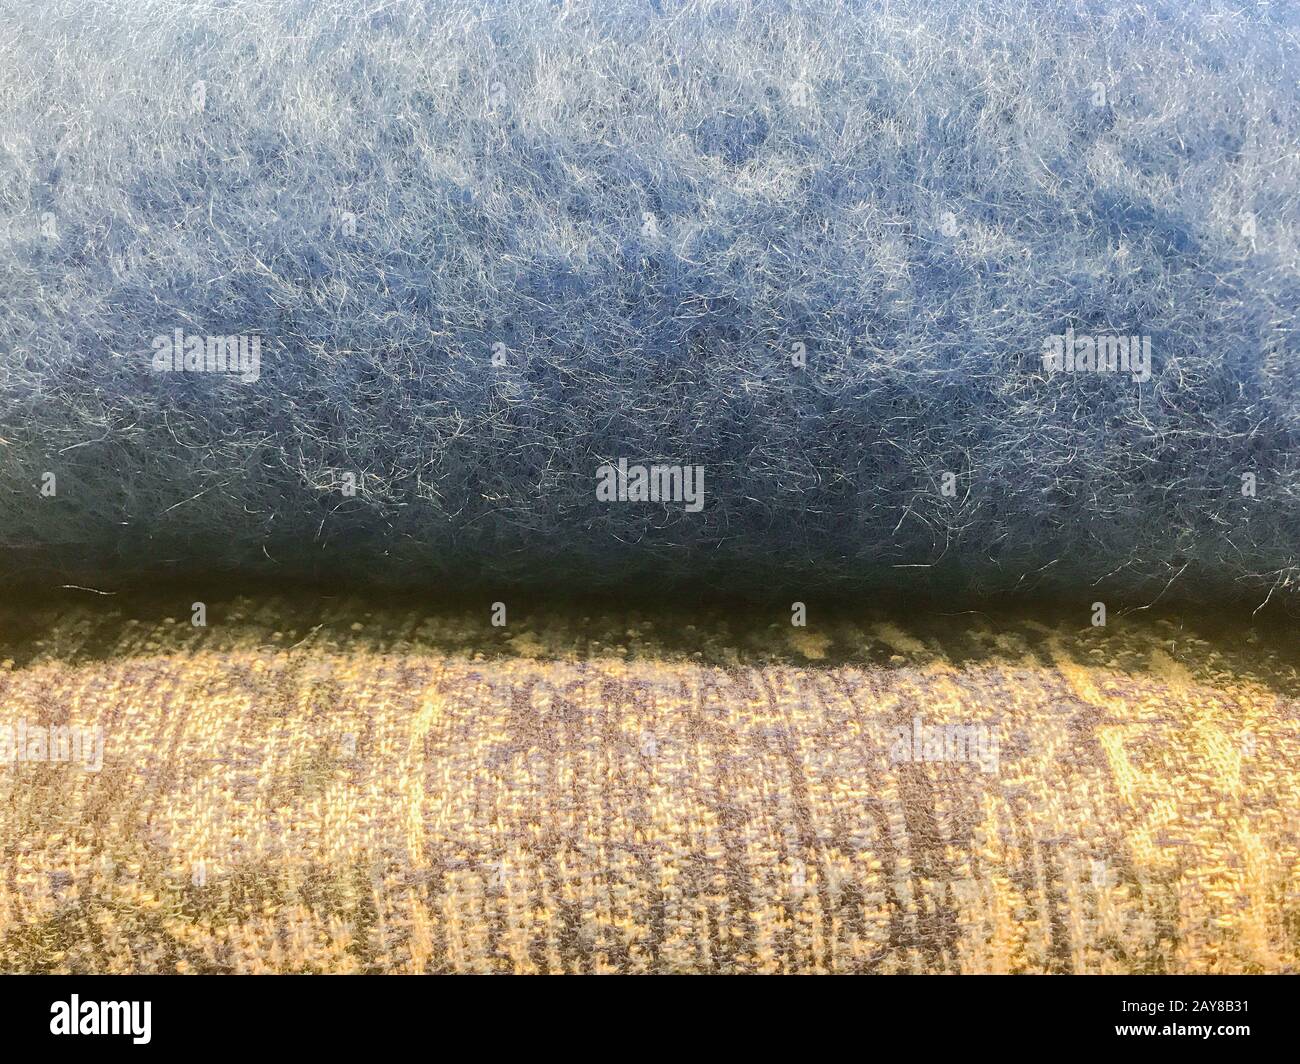 Alpaca fabrics and mohair wool as a Texture Stock Photo